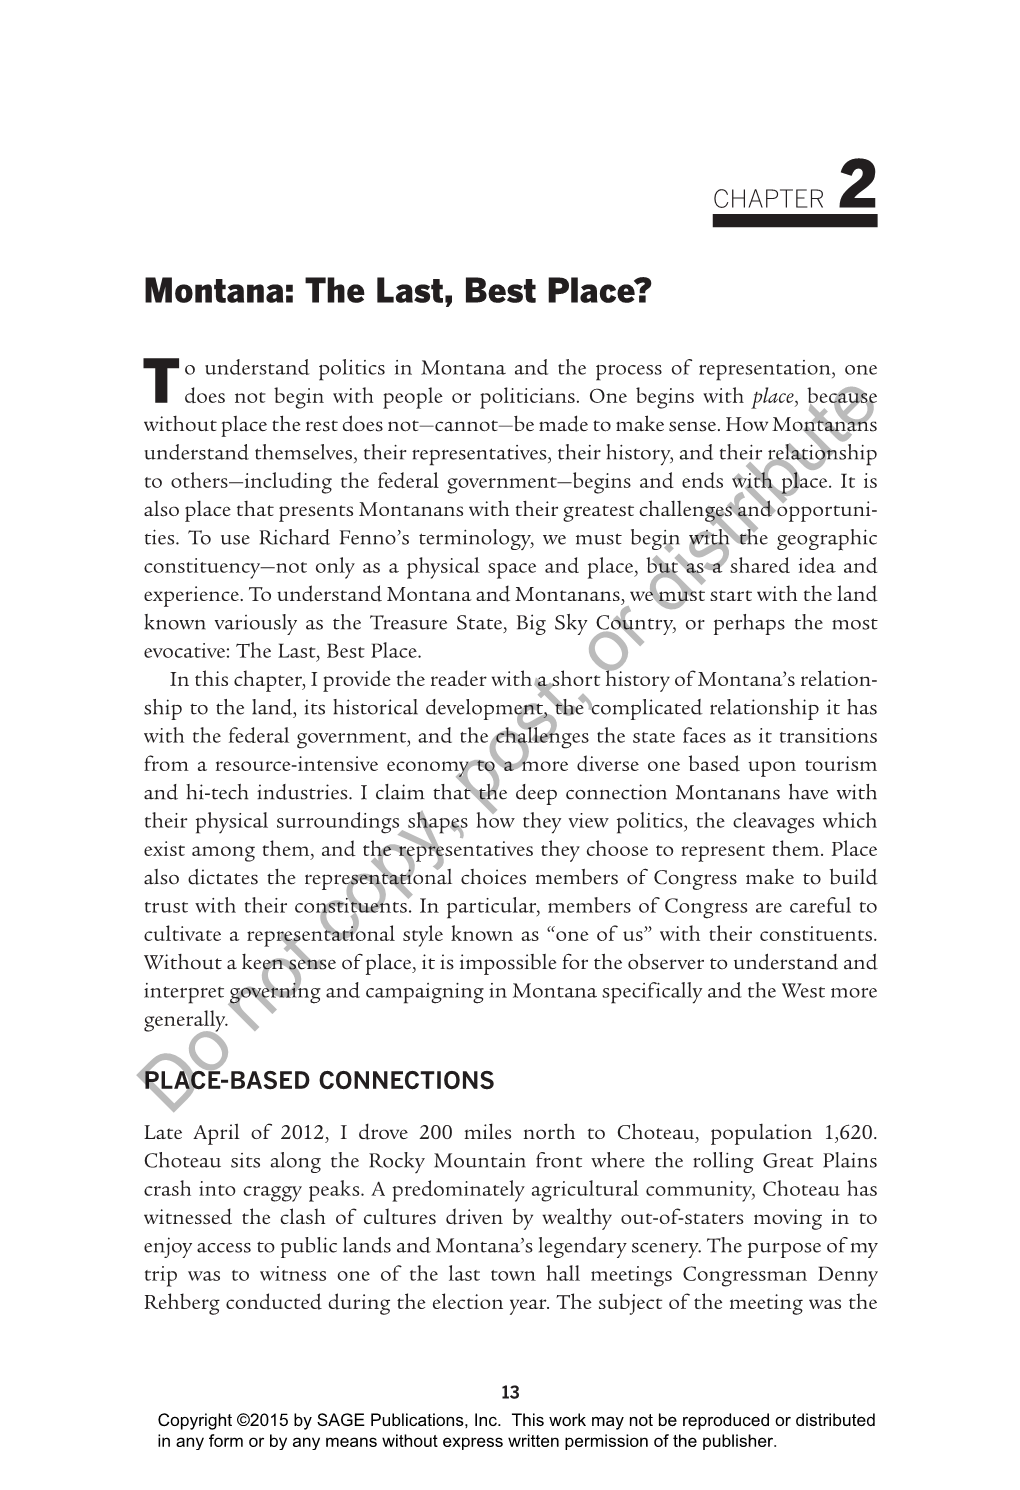 Montana: the Last, Best Place?